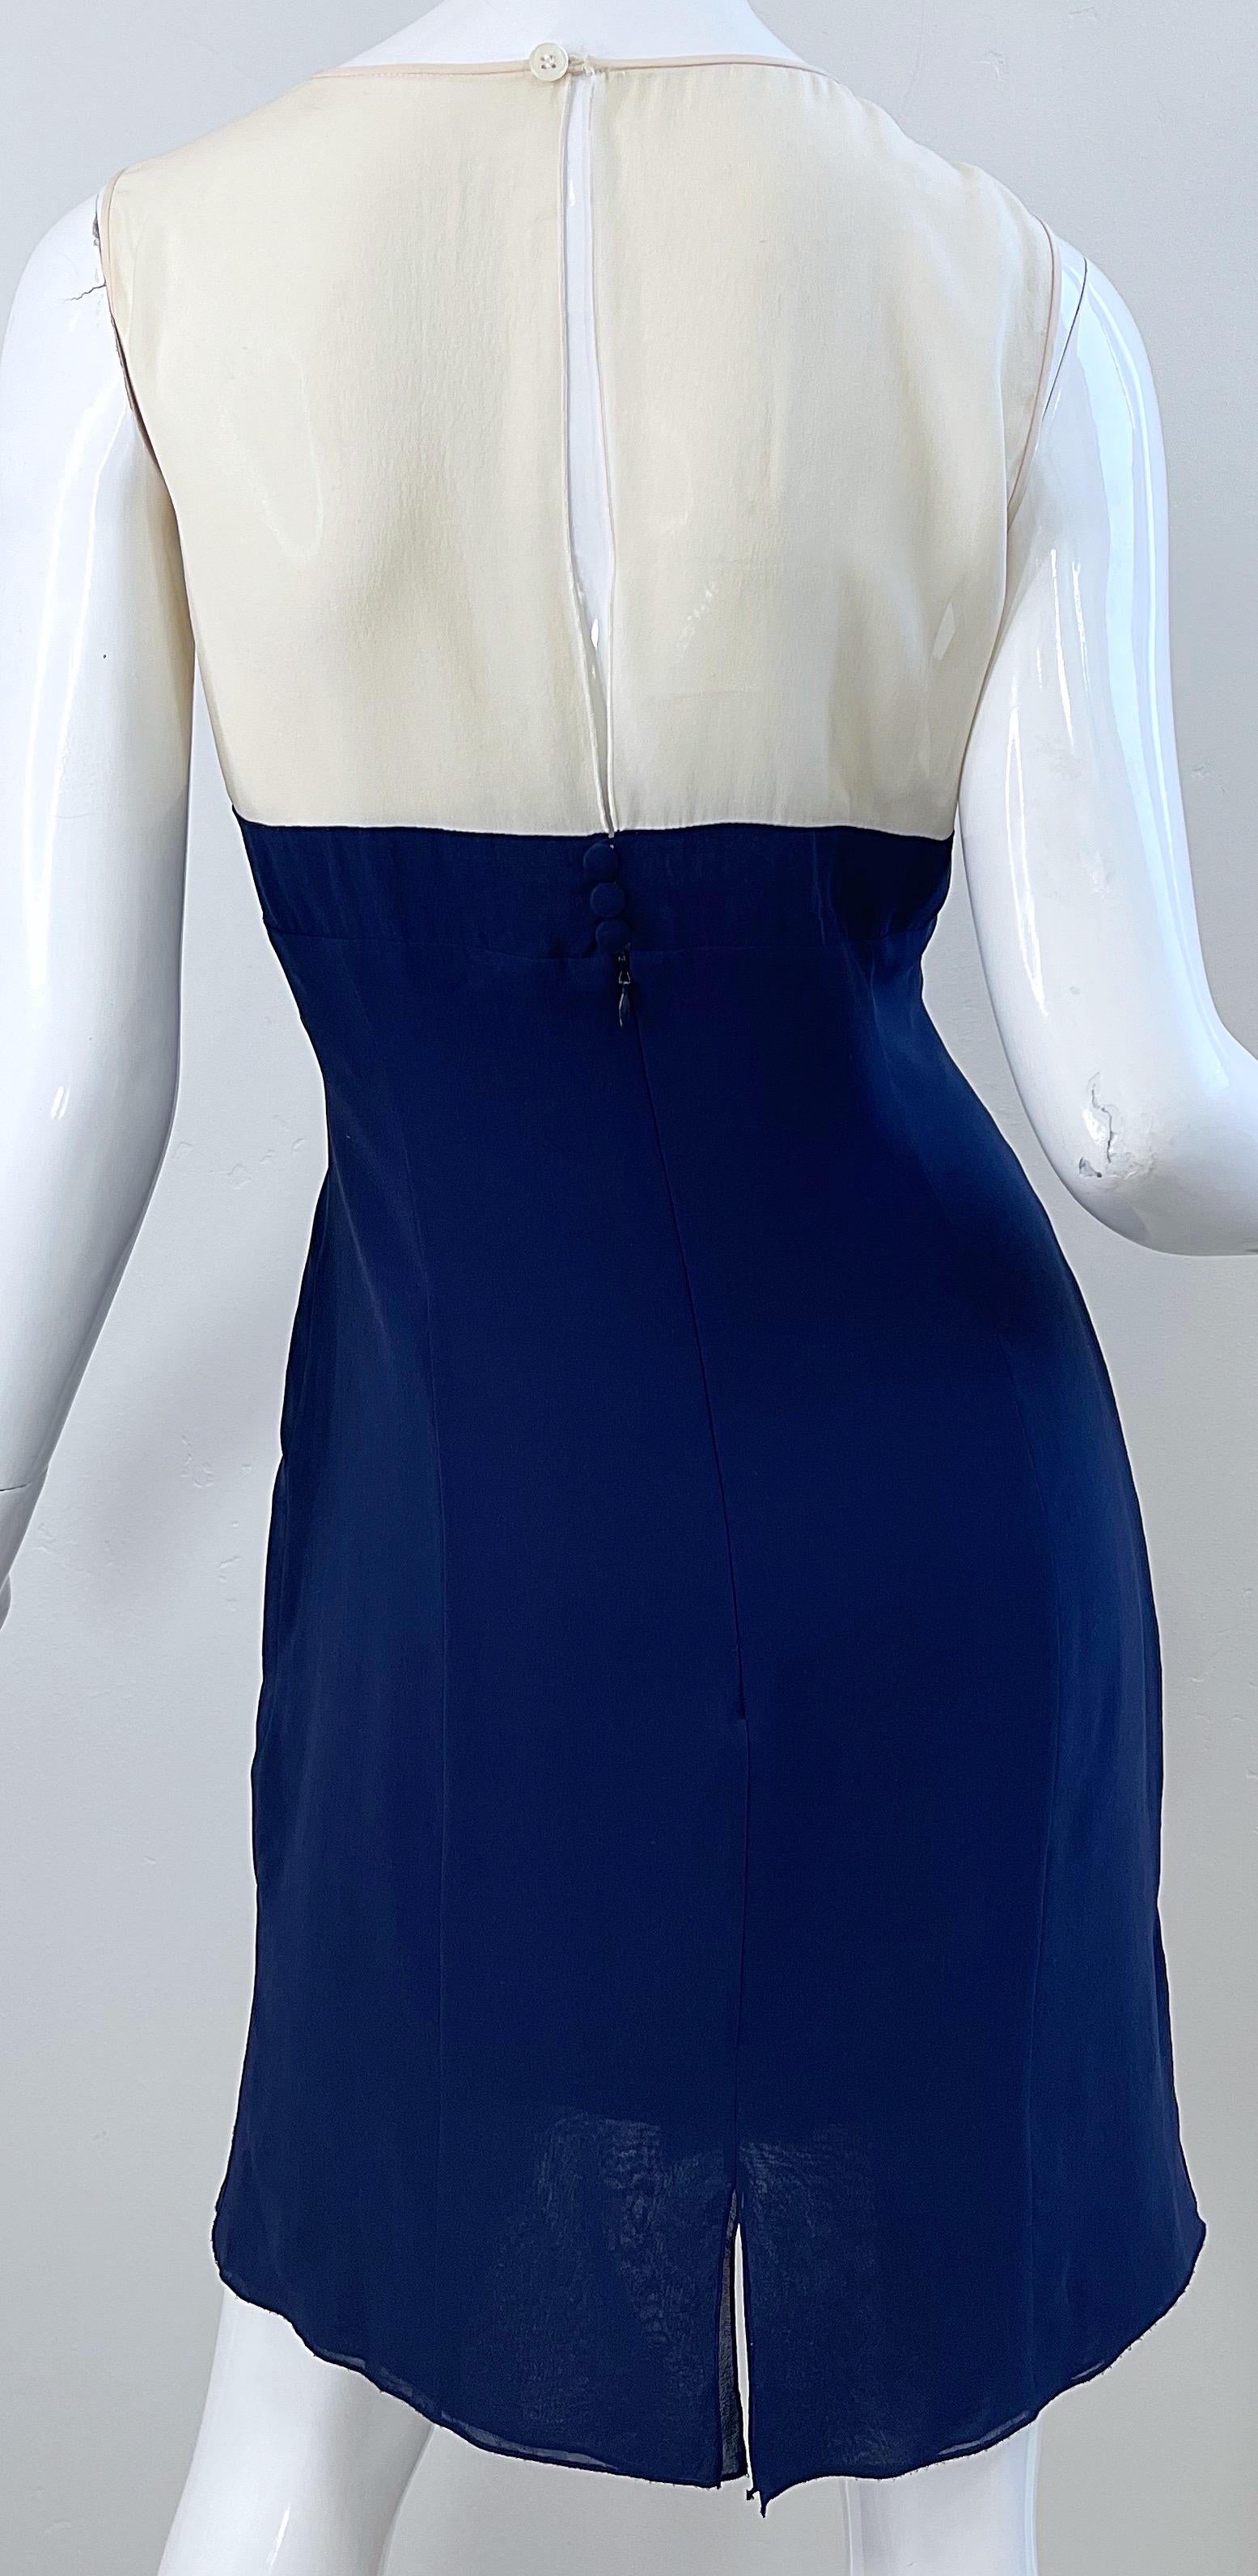 Karl Lagerfeld 1980s Size 44 / US 10 Navy Blue Silk Chiffon Vintage 80s Dress For Sale 6